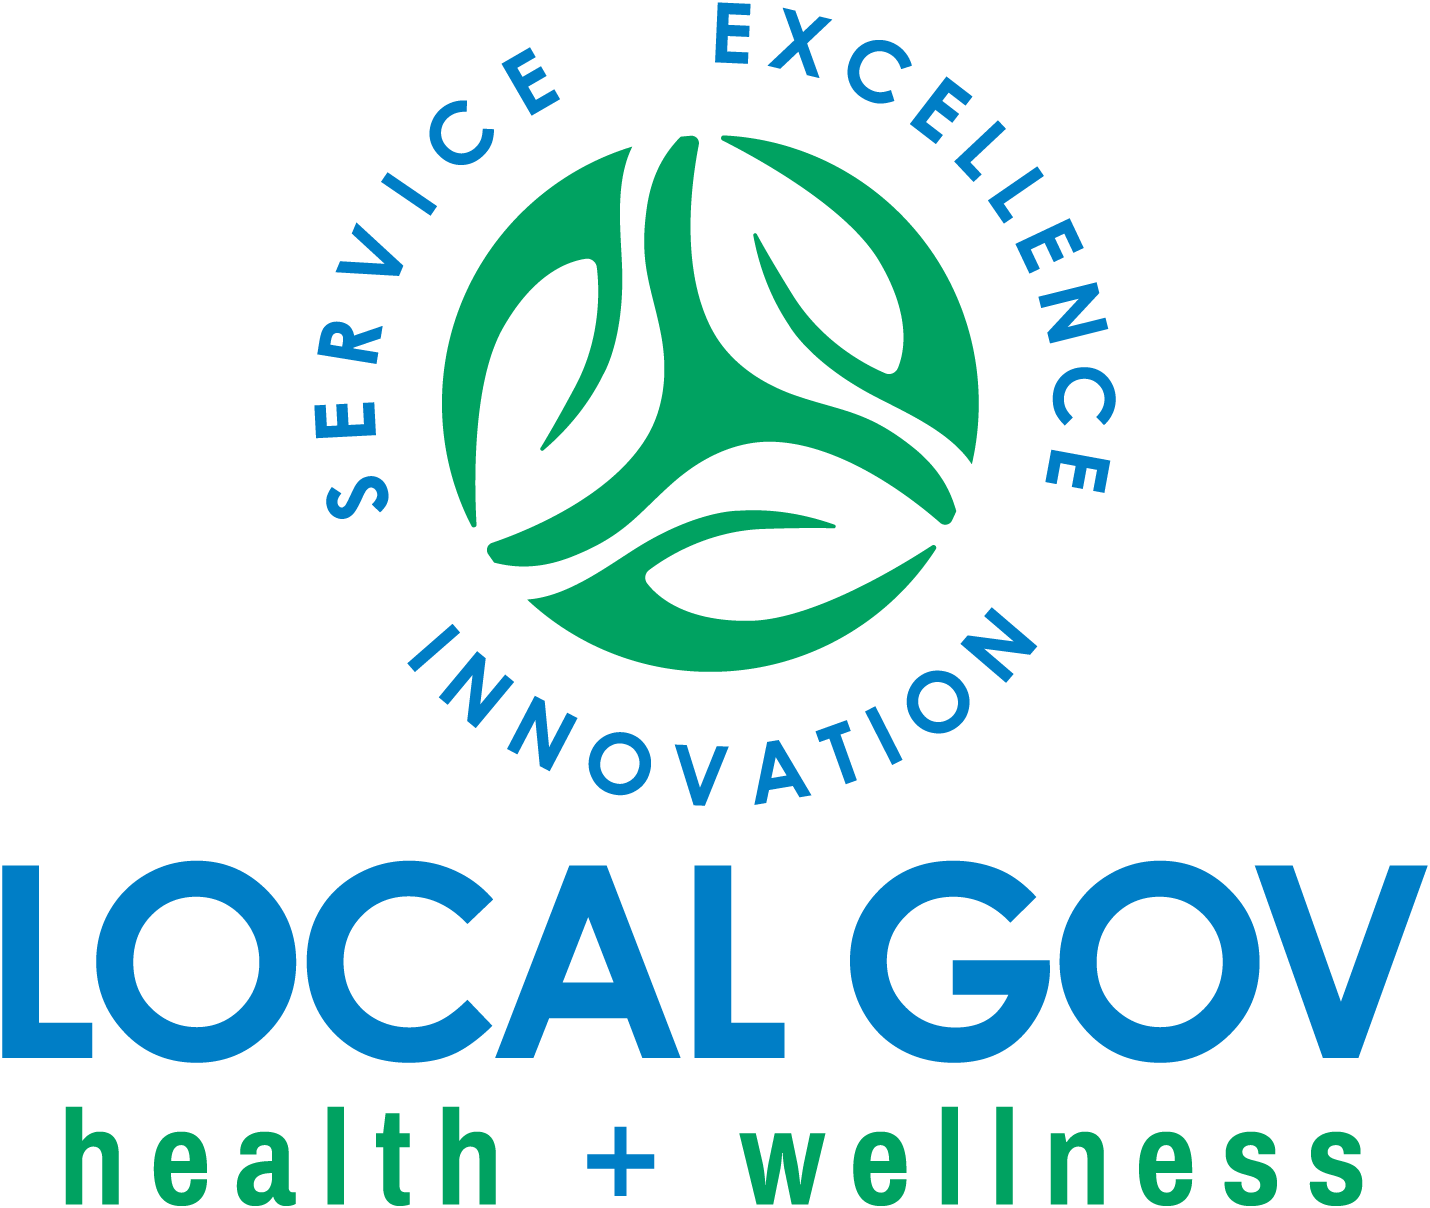 LOCAL GOV health + wellness service / excellence / innovation